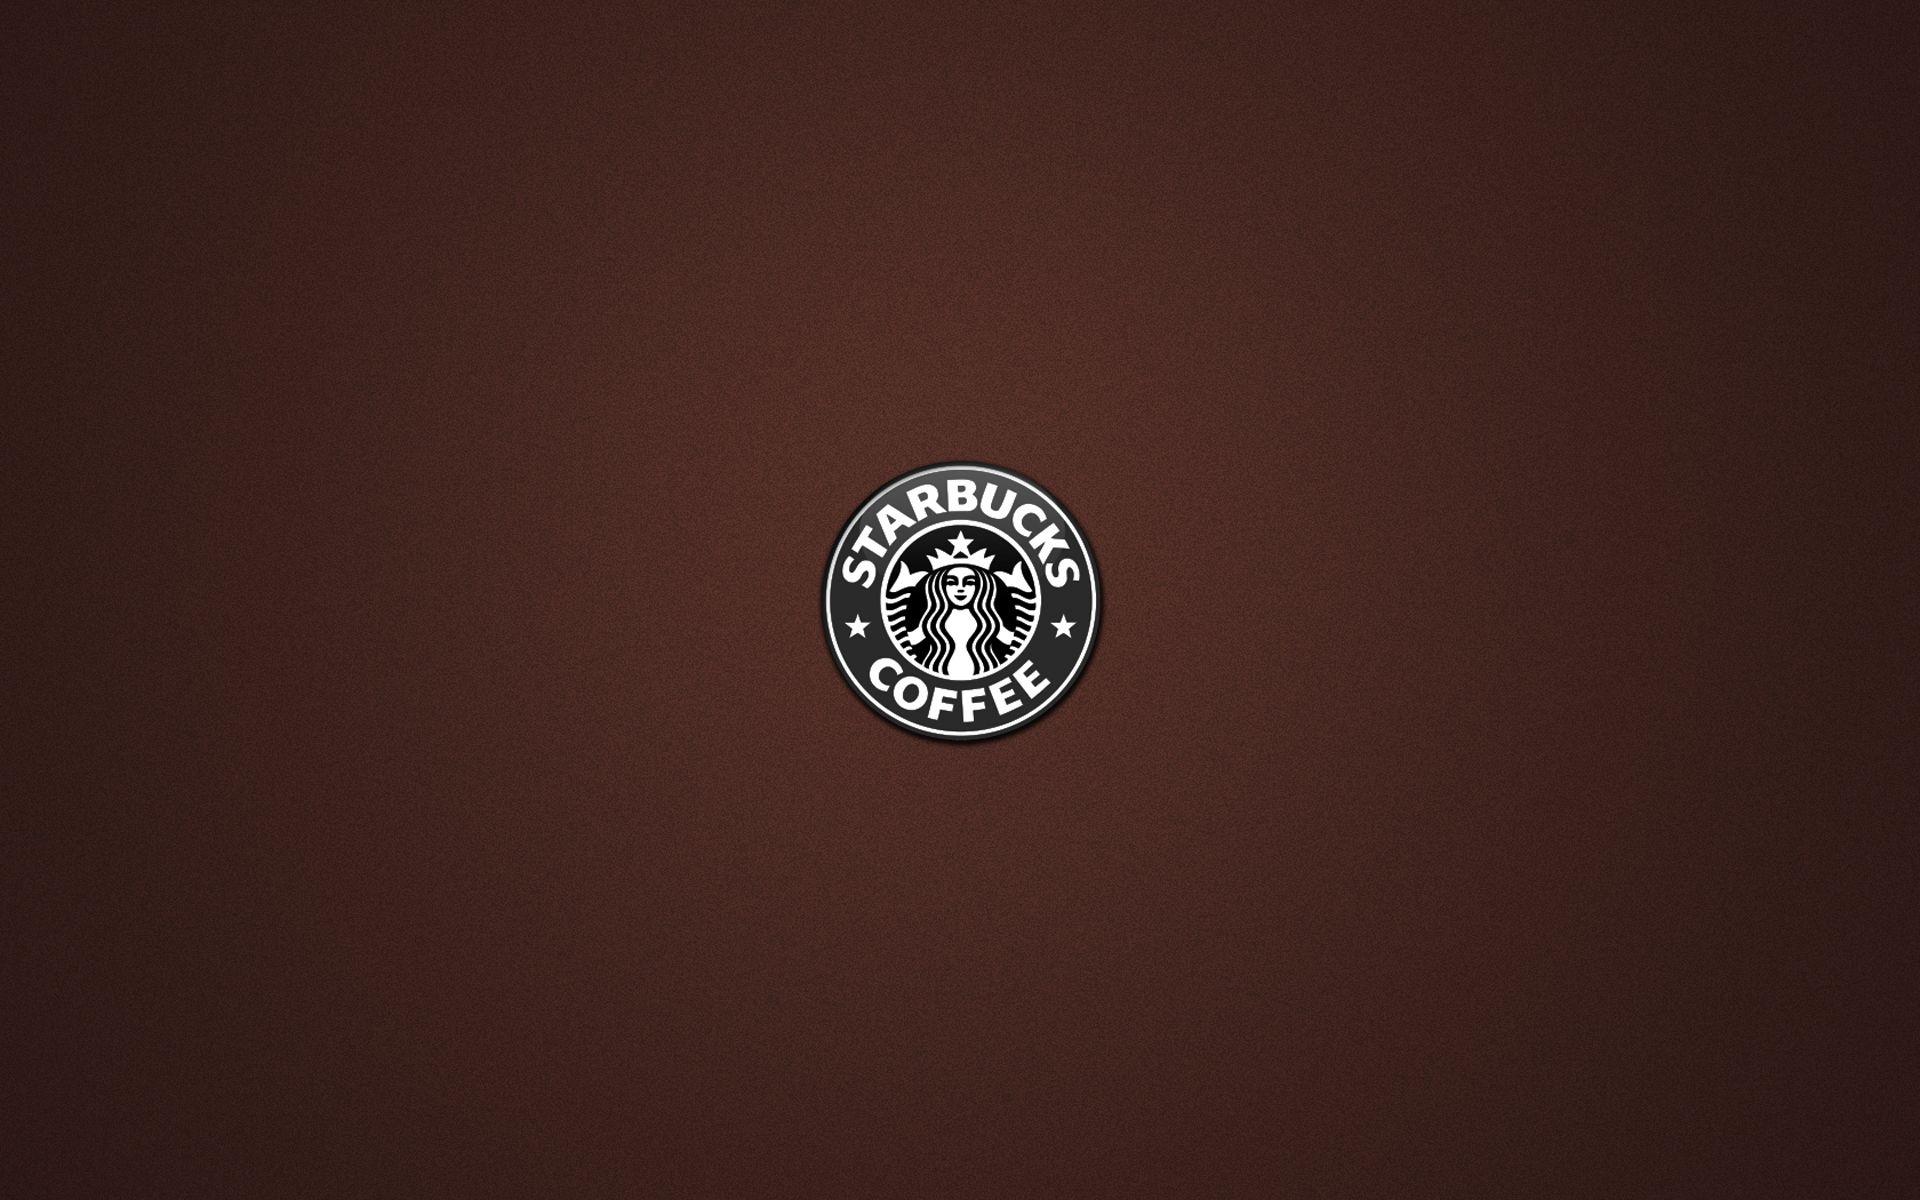 Starbucks Logo Wallpaper 41972 1920x1200 px